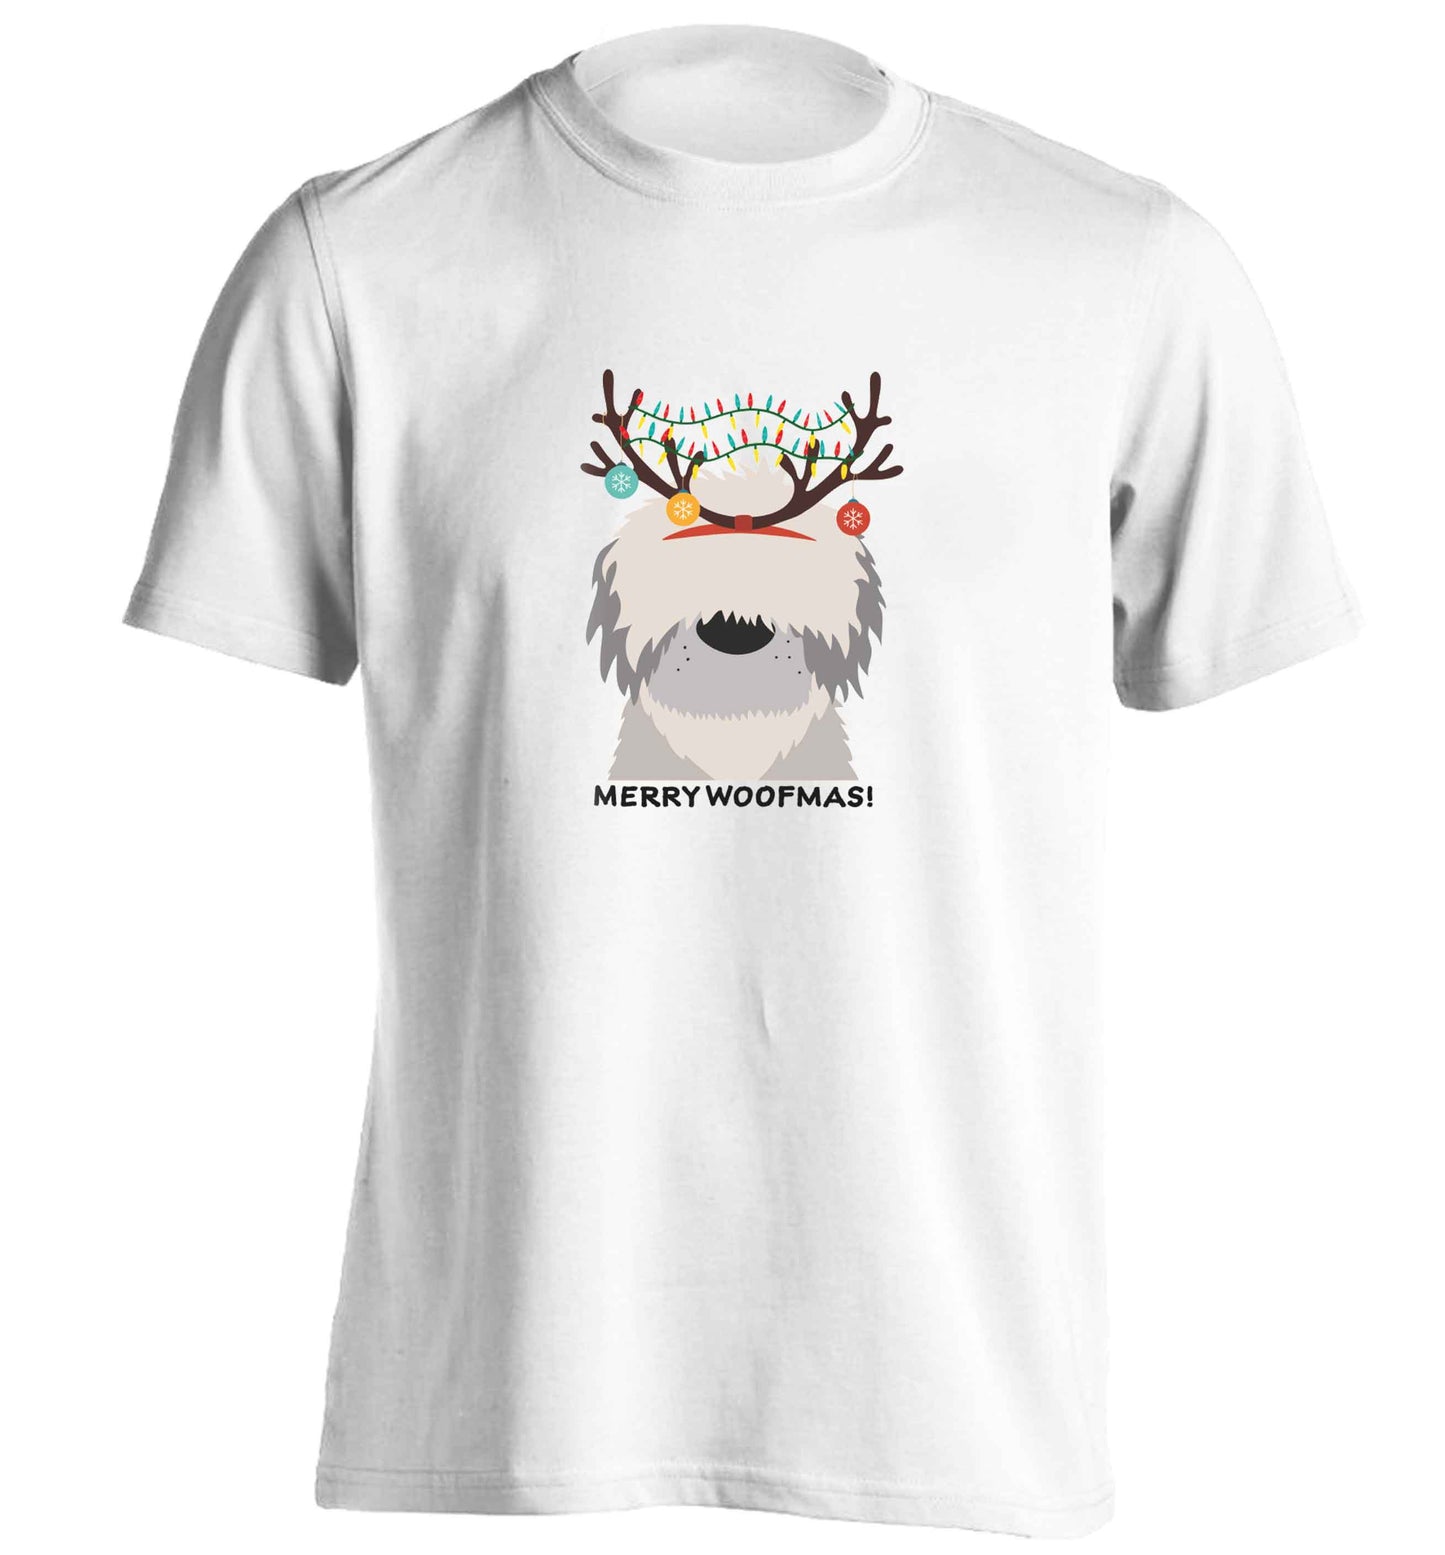 Merry Woofmas! adults unisex white Tshirt 2XL